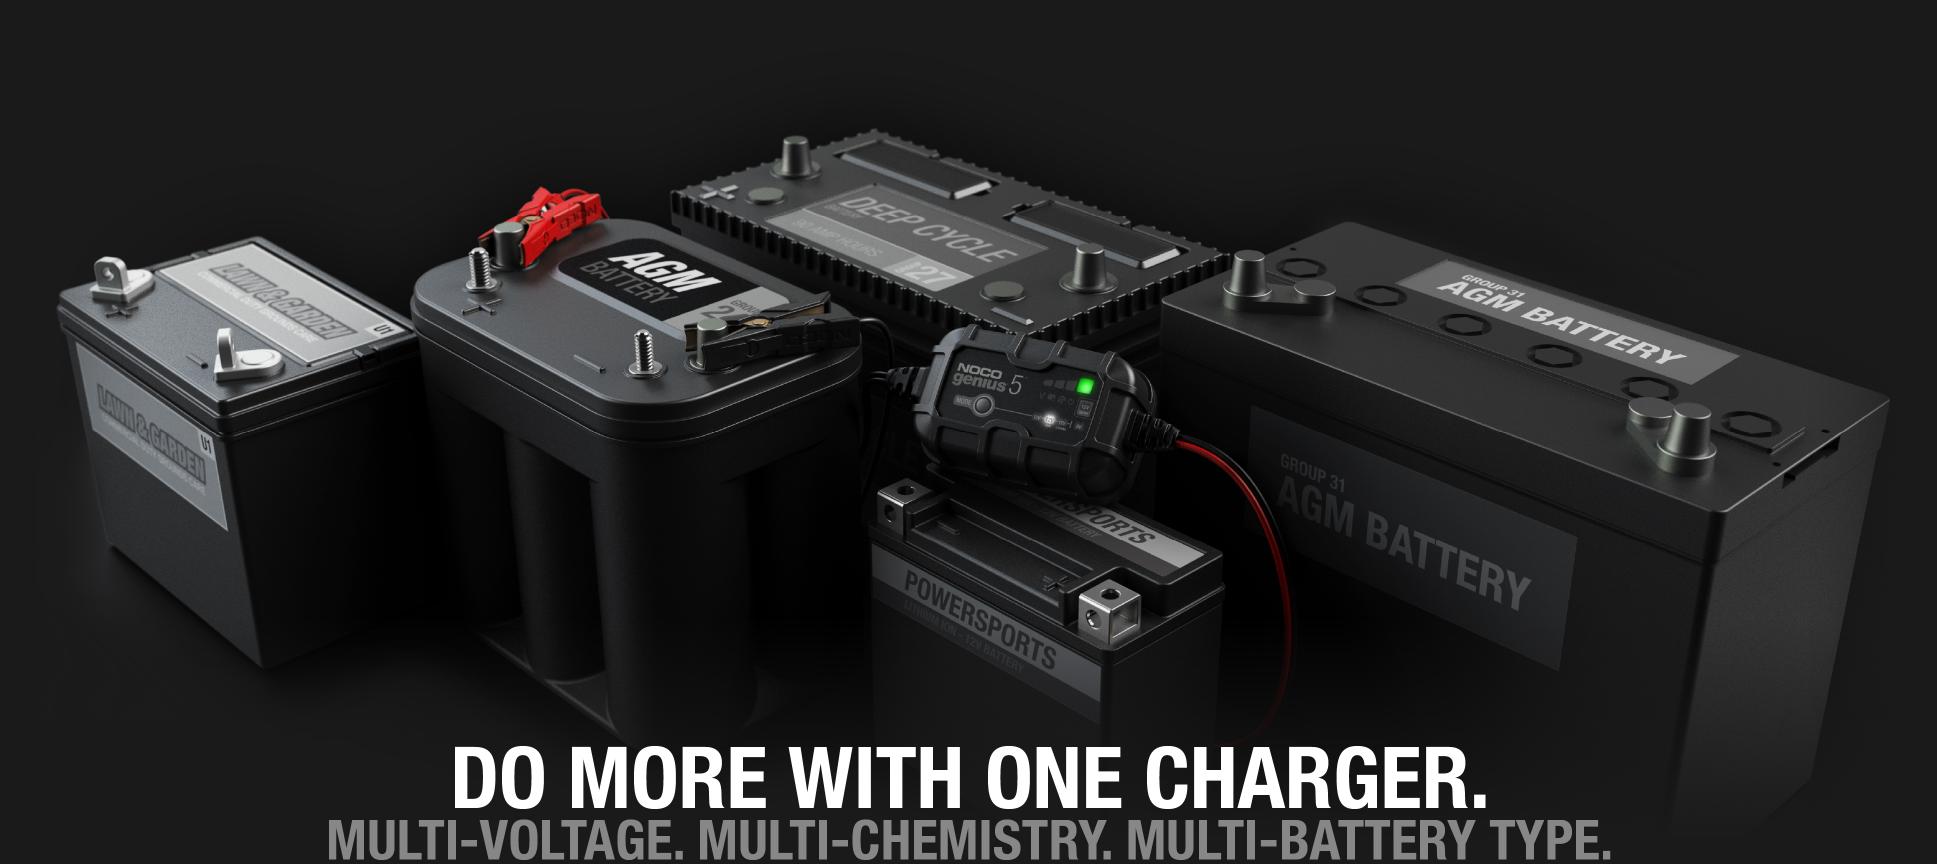 NOCO GENIUS10 NOCO GENIUS10 Smart Battery Chargers | DX Engineering